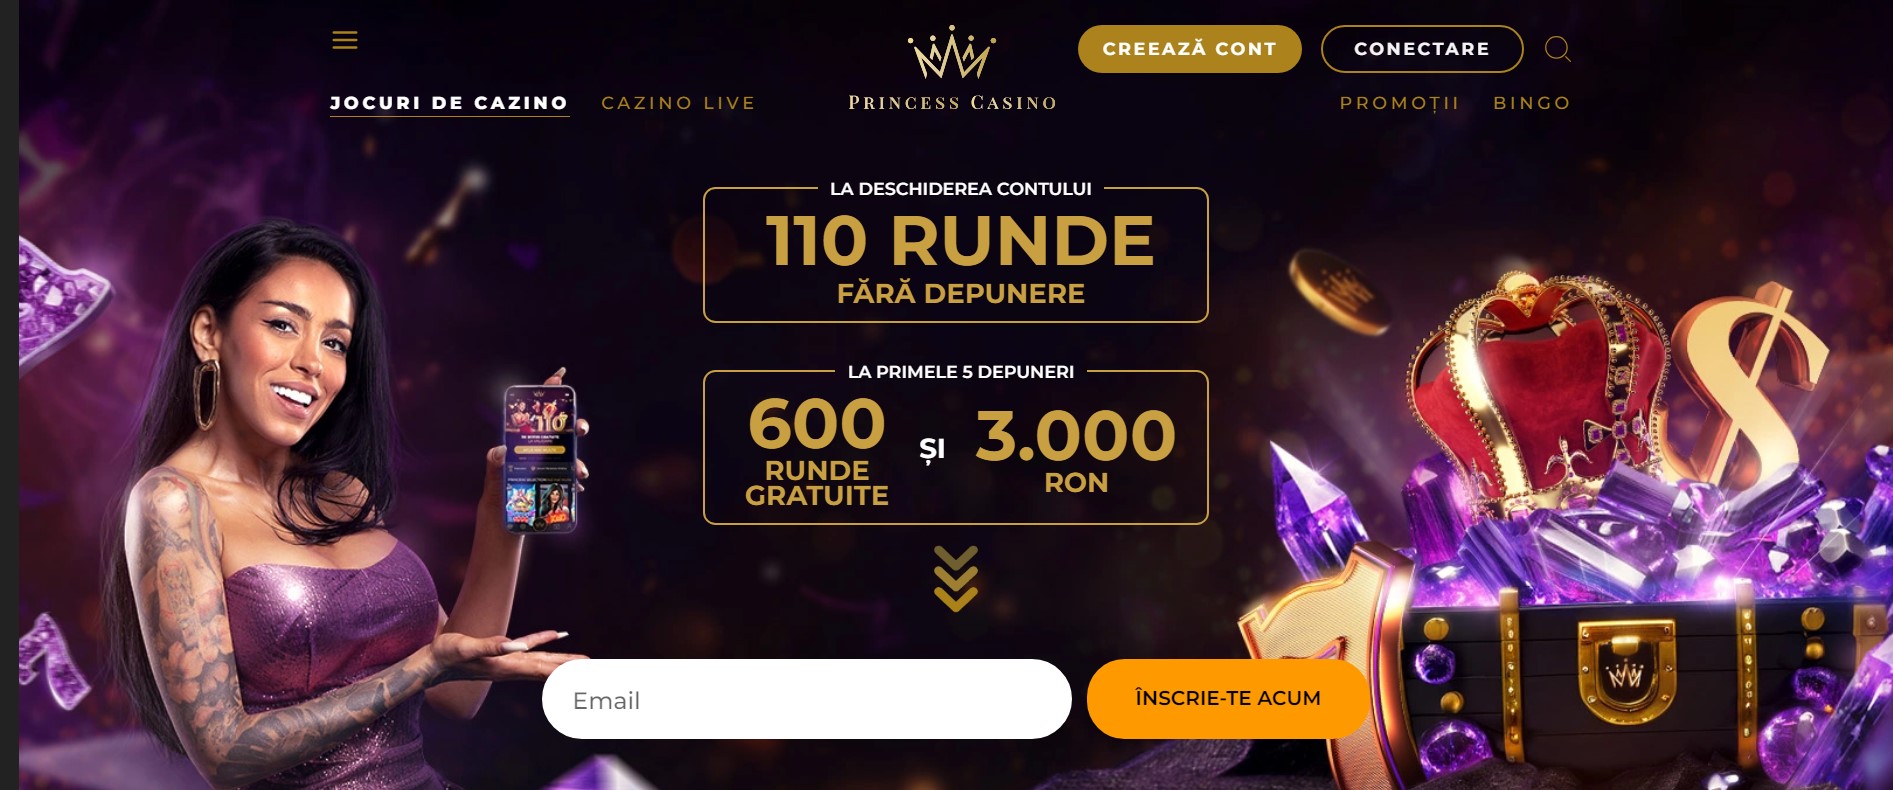 Princess casino : Quali bonus e offerte promozionali